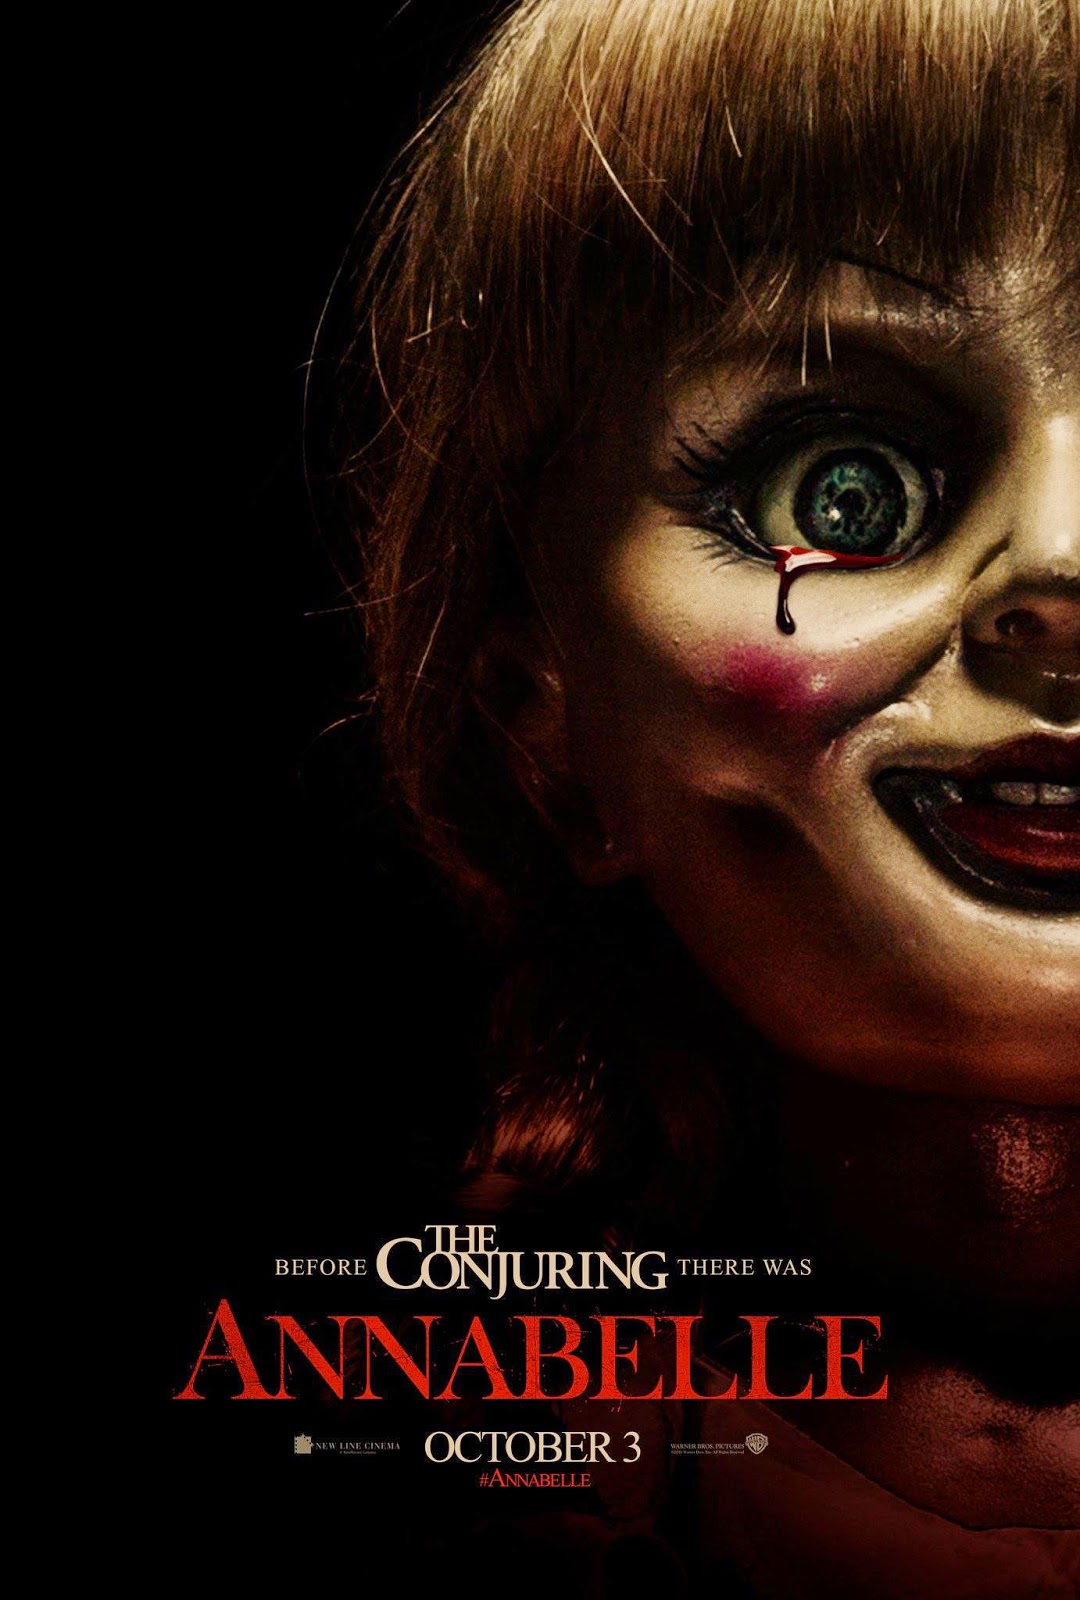 Annabelle 2014 Movie Poster